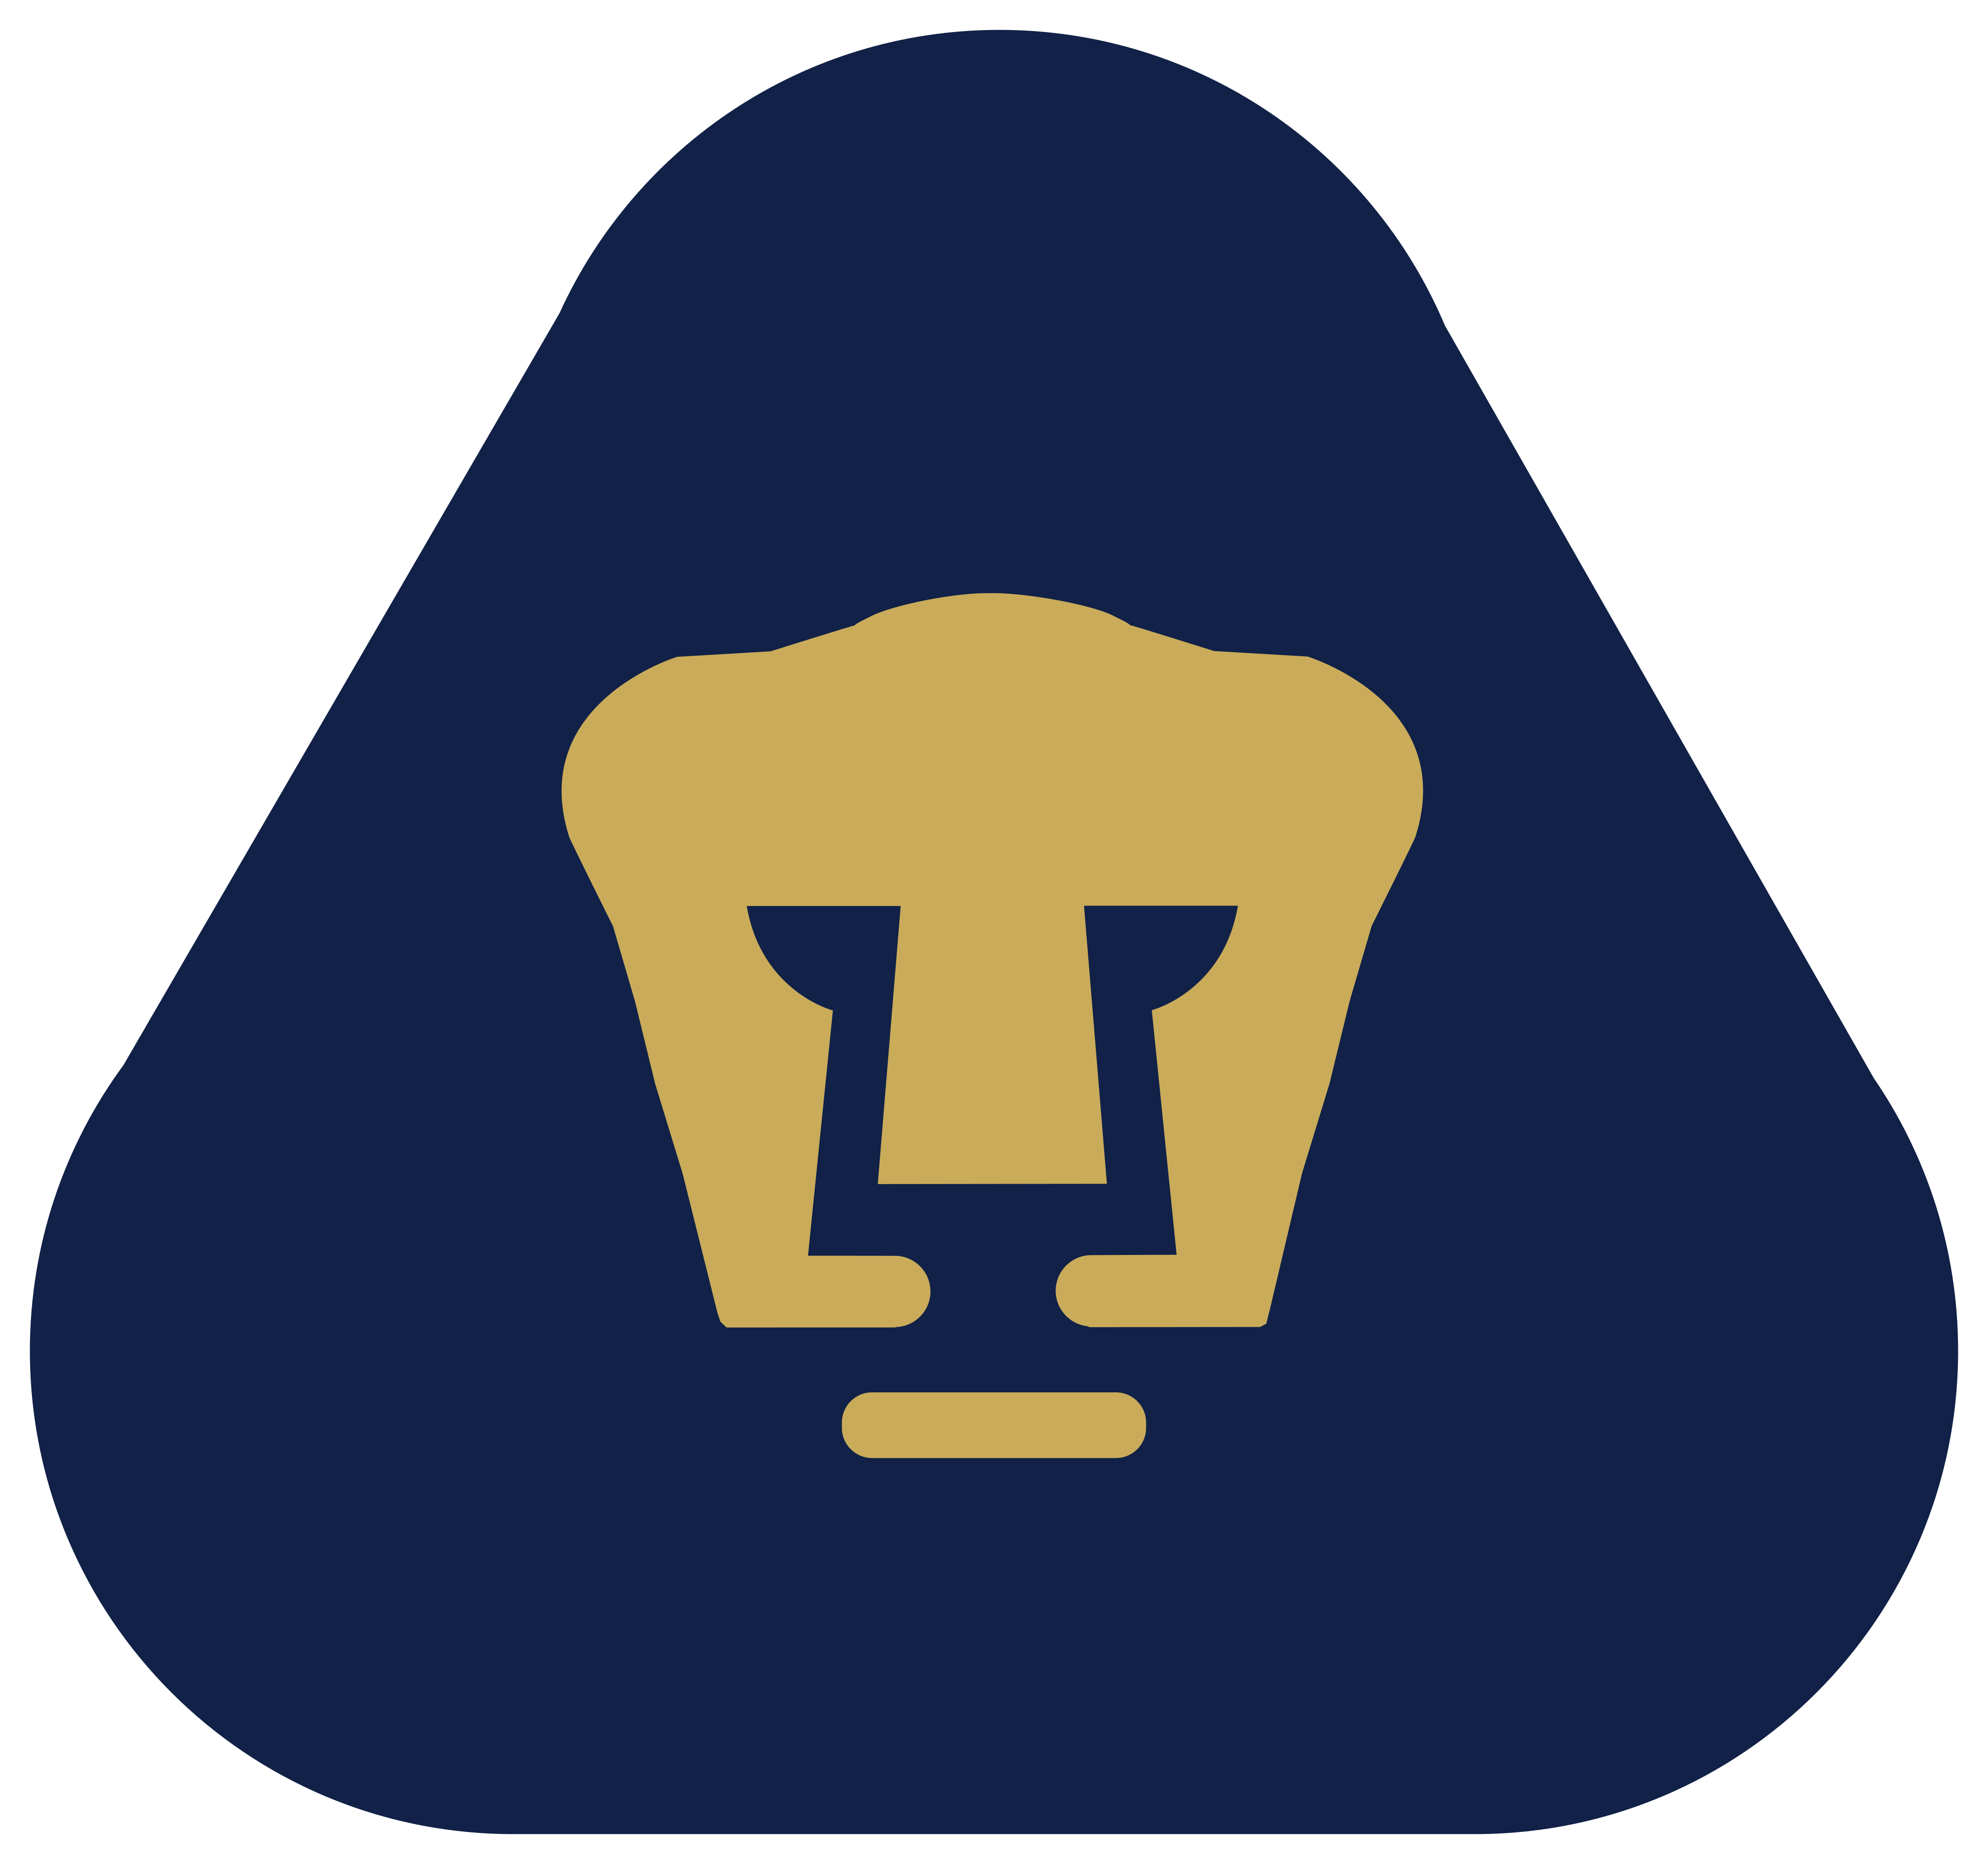 pumas unam logo 5 - Pumas UNAM Logo - Escudo